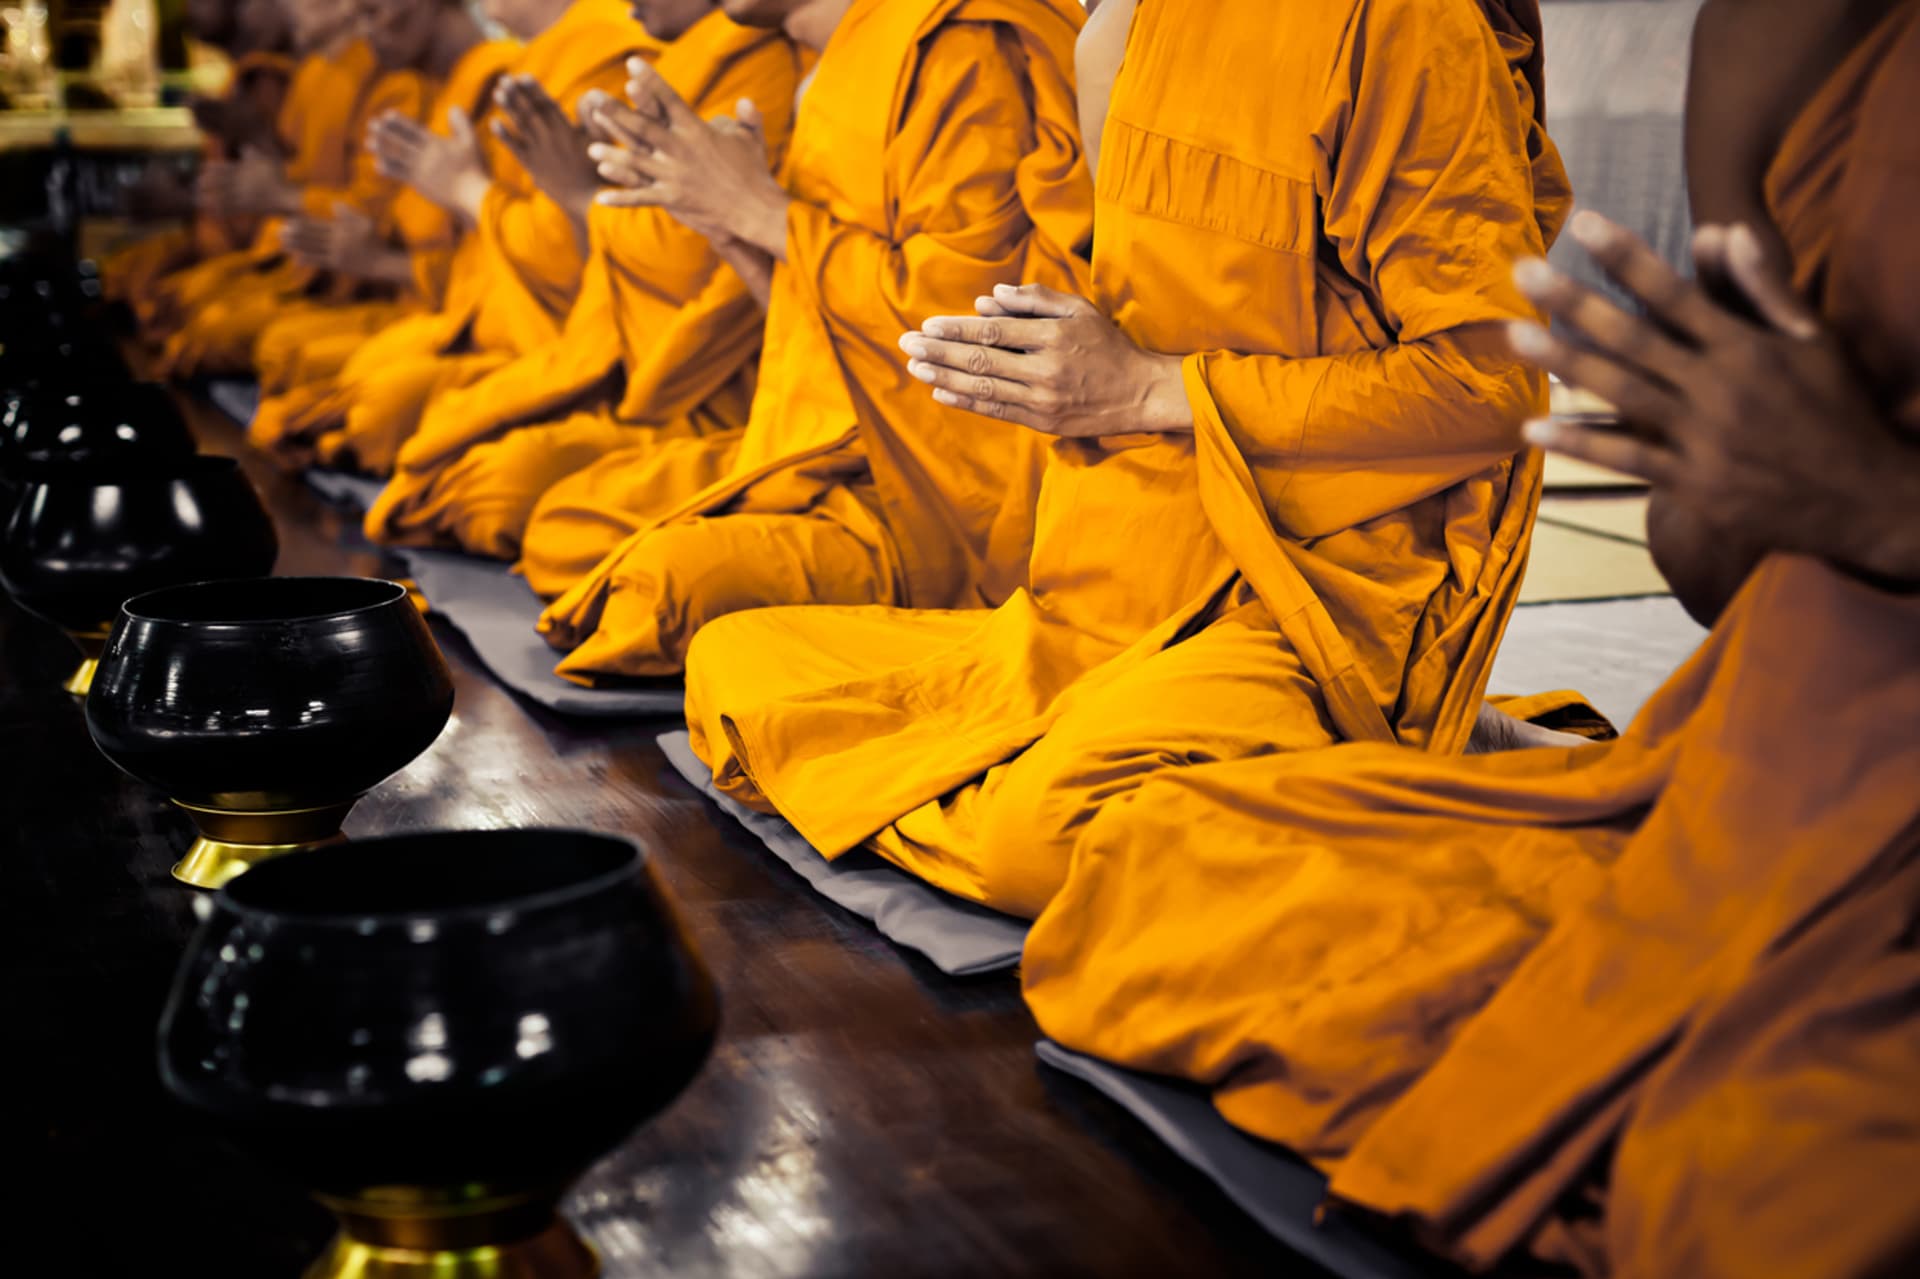 Budhistický klášter museli uzavřít kvůli drogám.